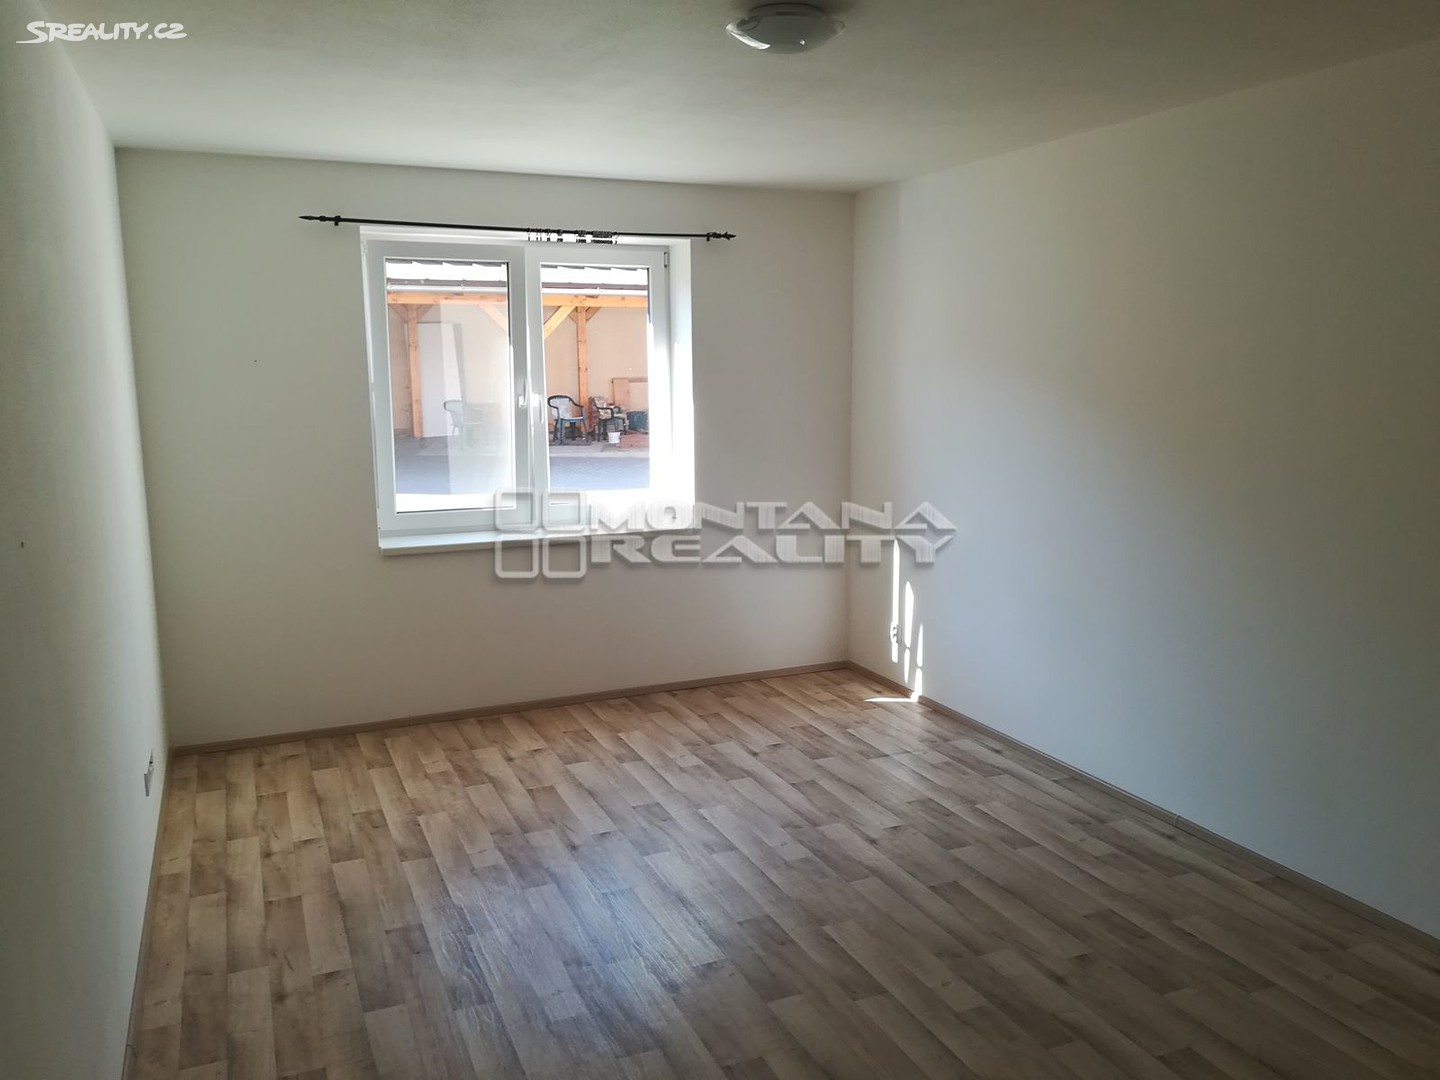 Pronájem bytu 1+kk 29 m², Ústín, okres Olomouc